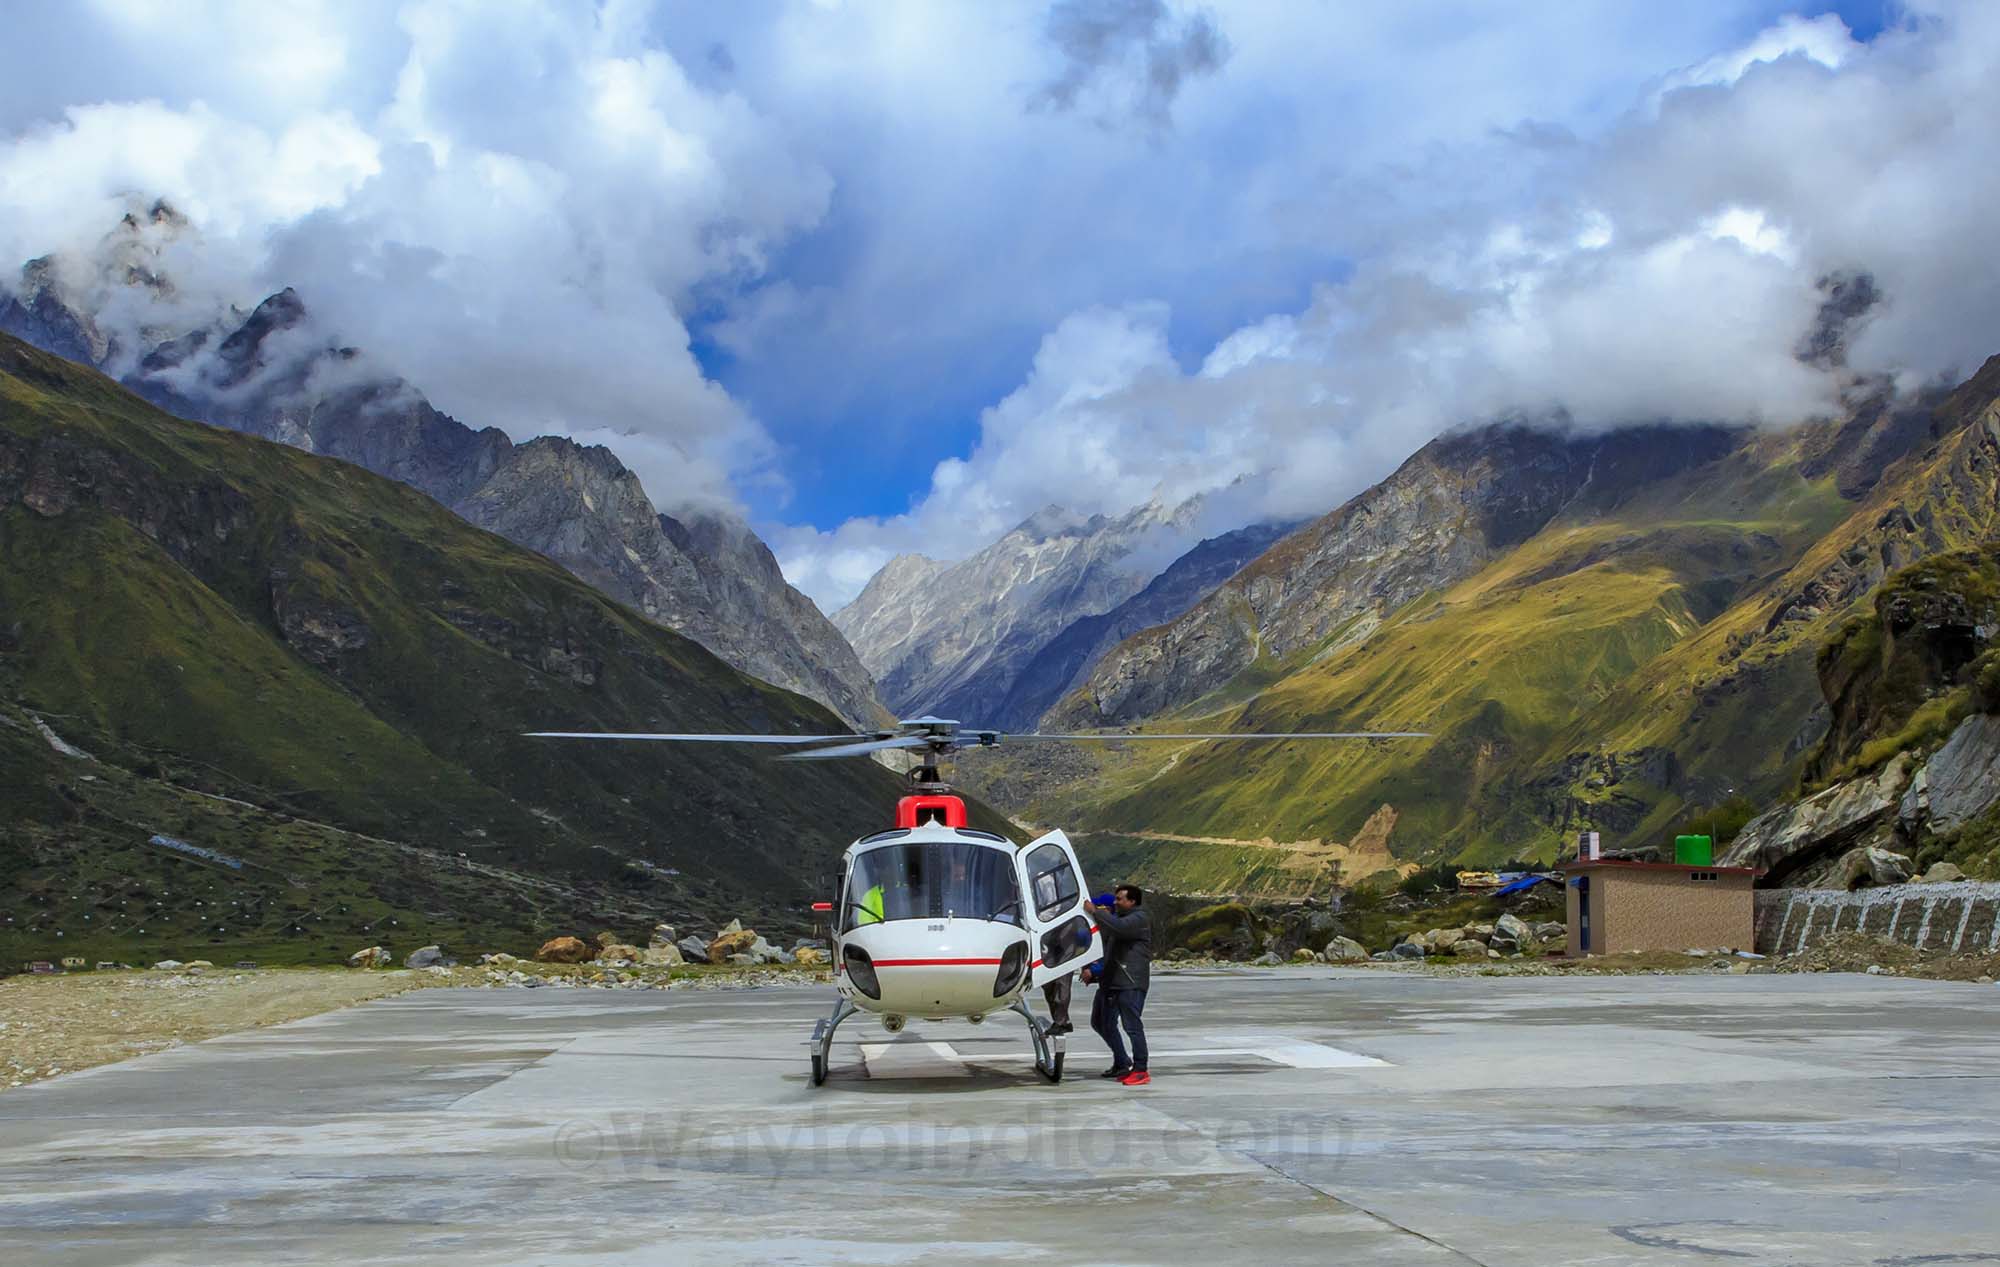 kedarnath tour helicopter service